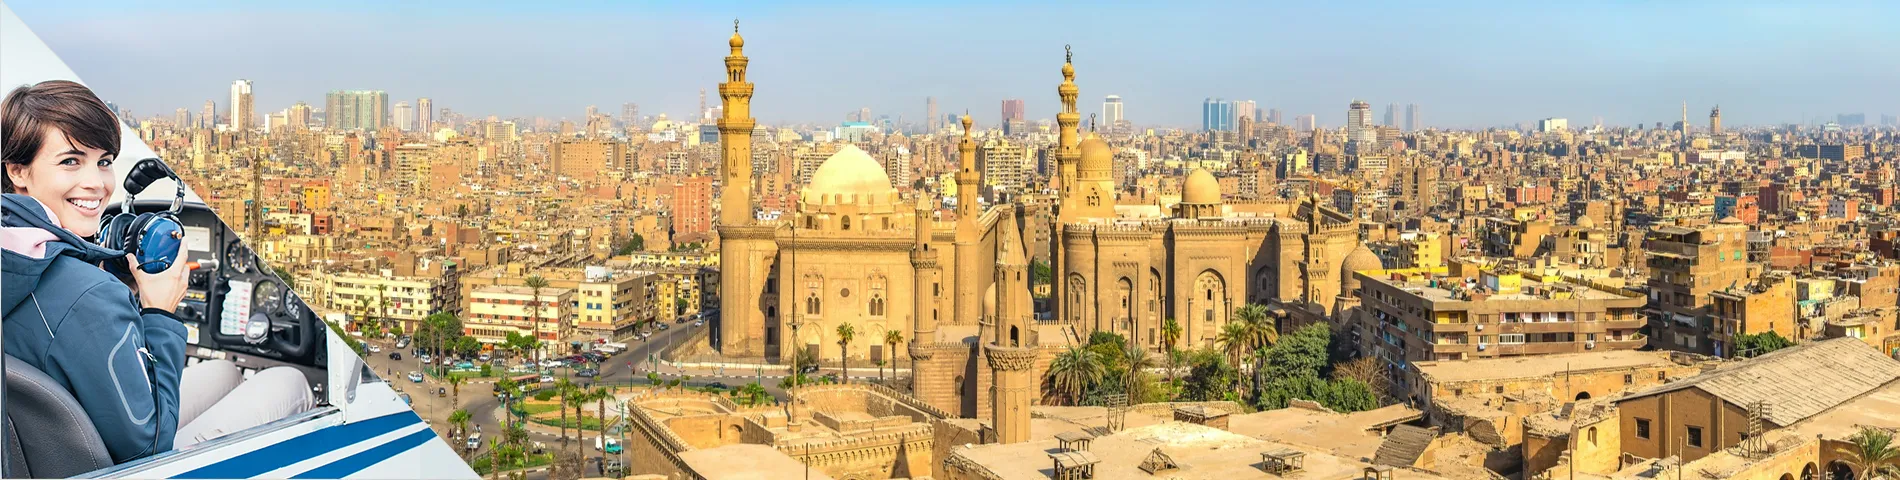 Каїр - арабська в сфері авіації